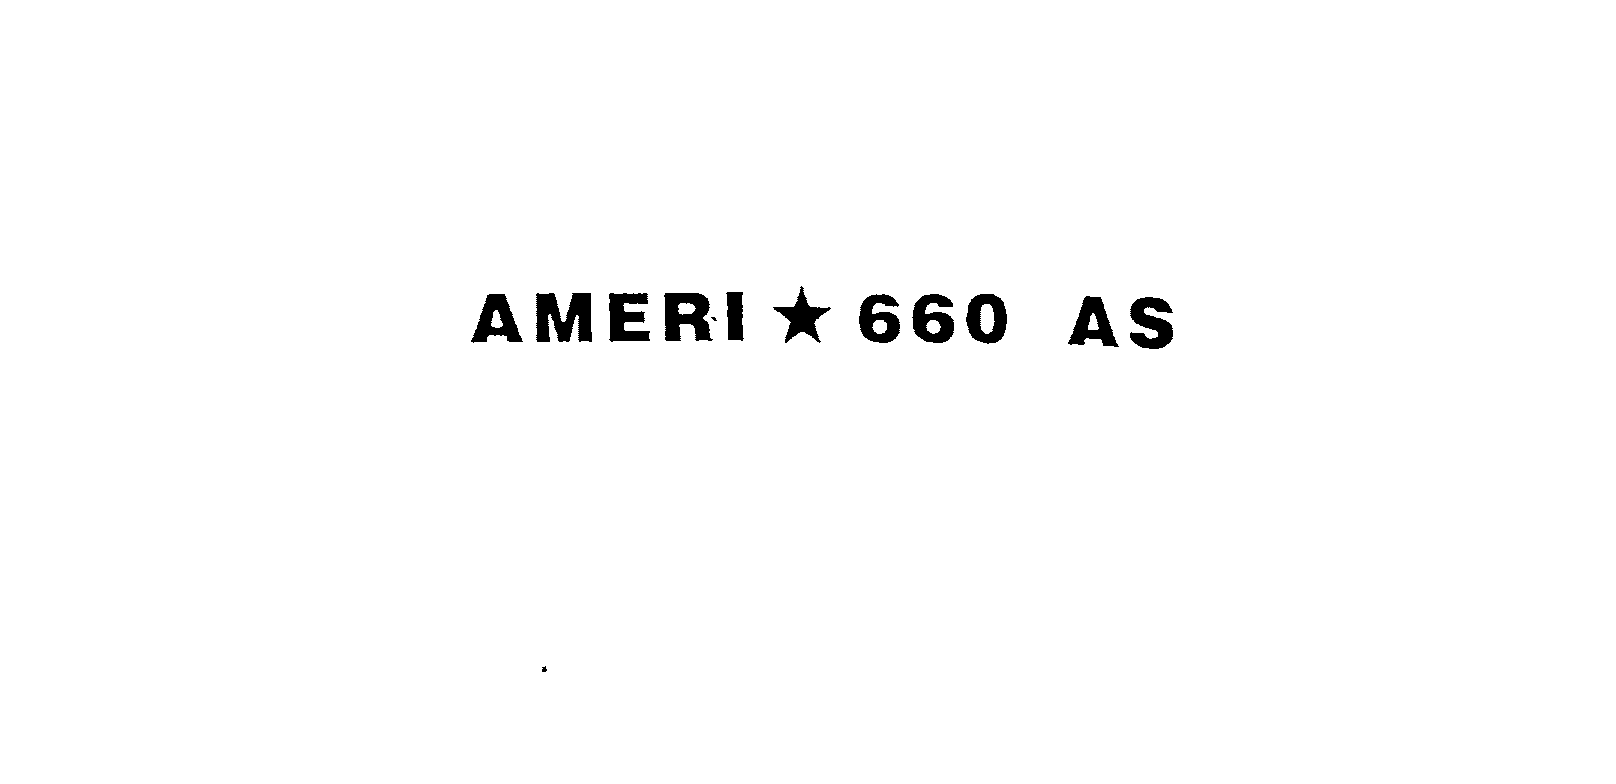  AMERI*660 AS